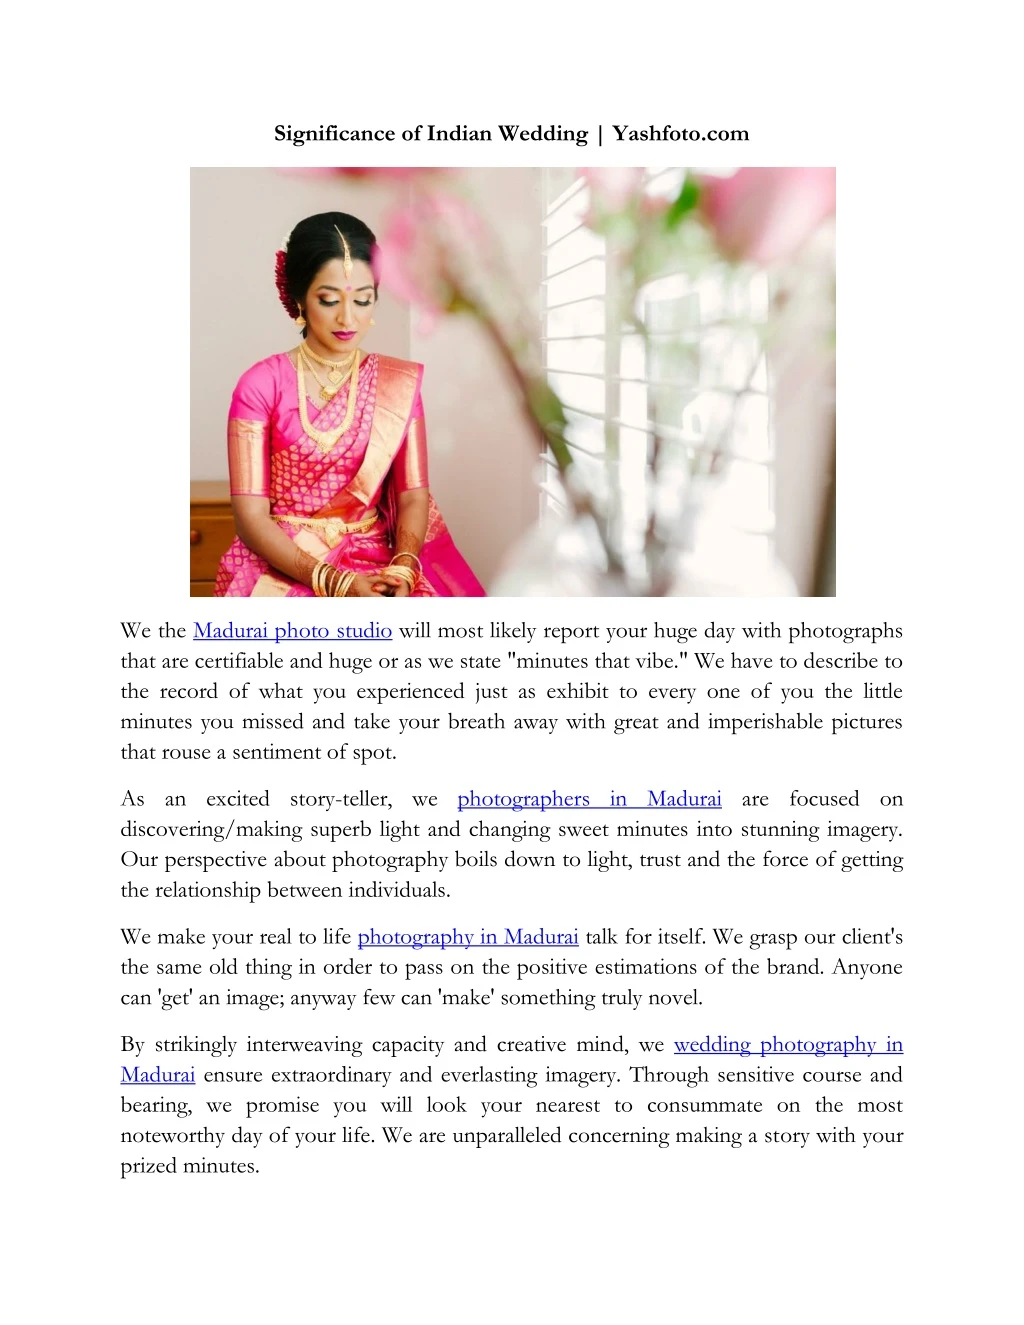 significance of indian wedding yashfoto com